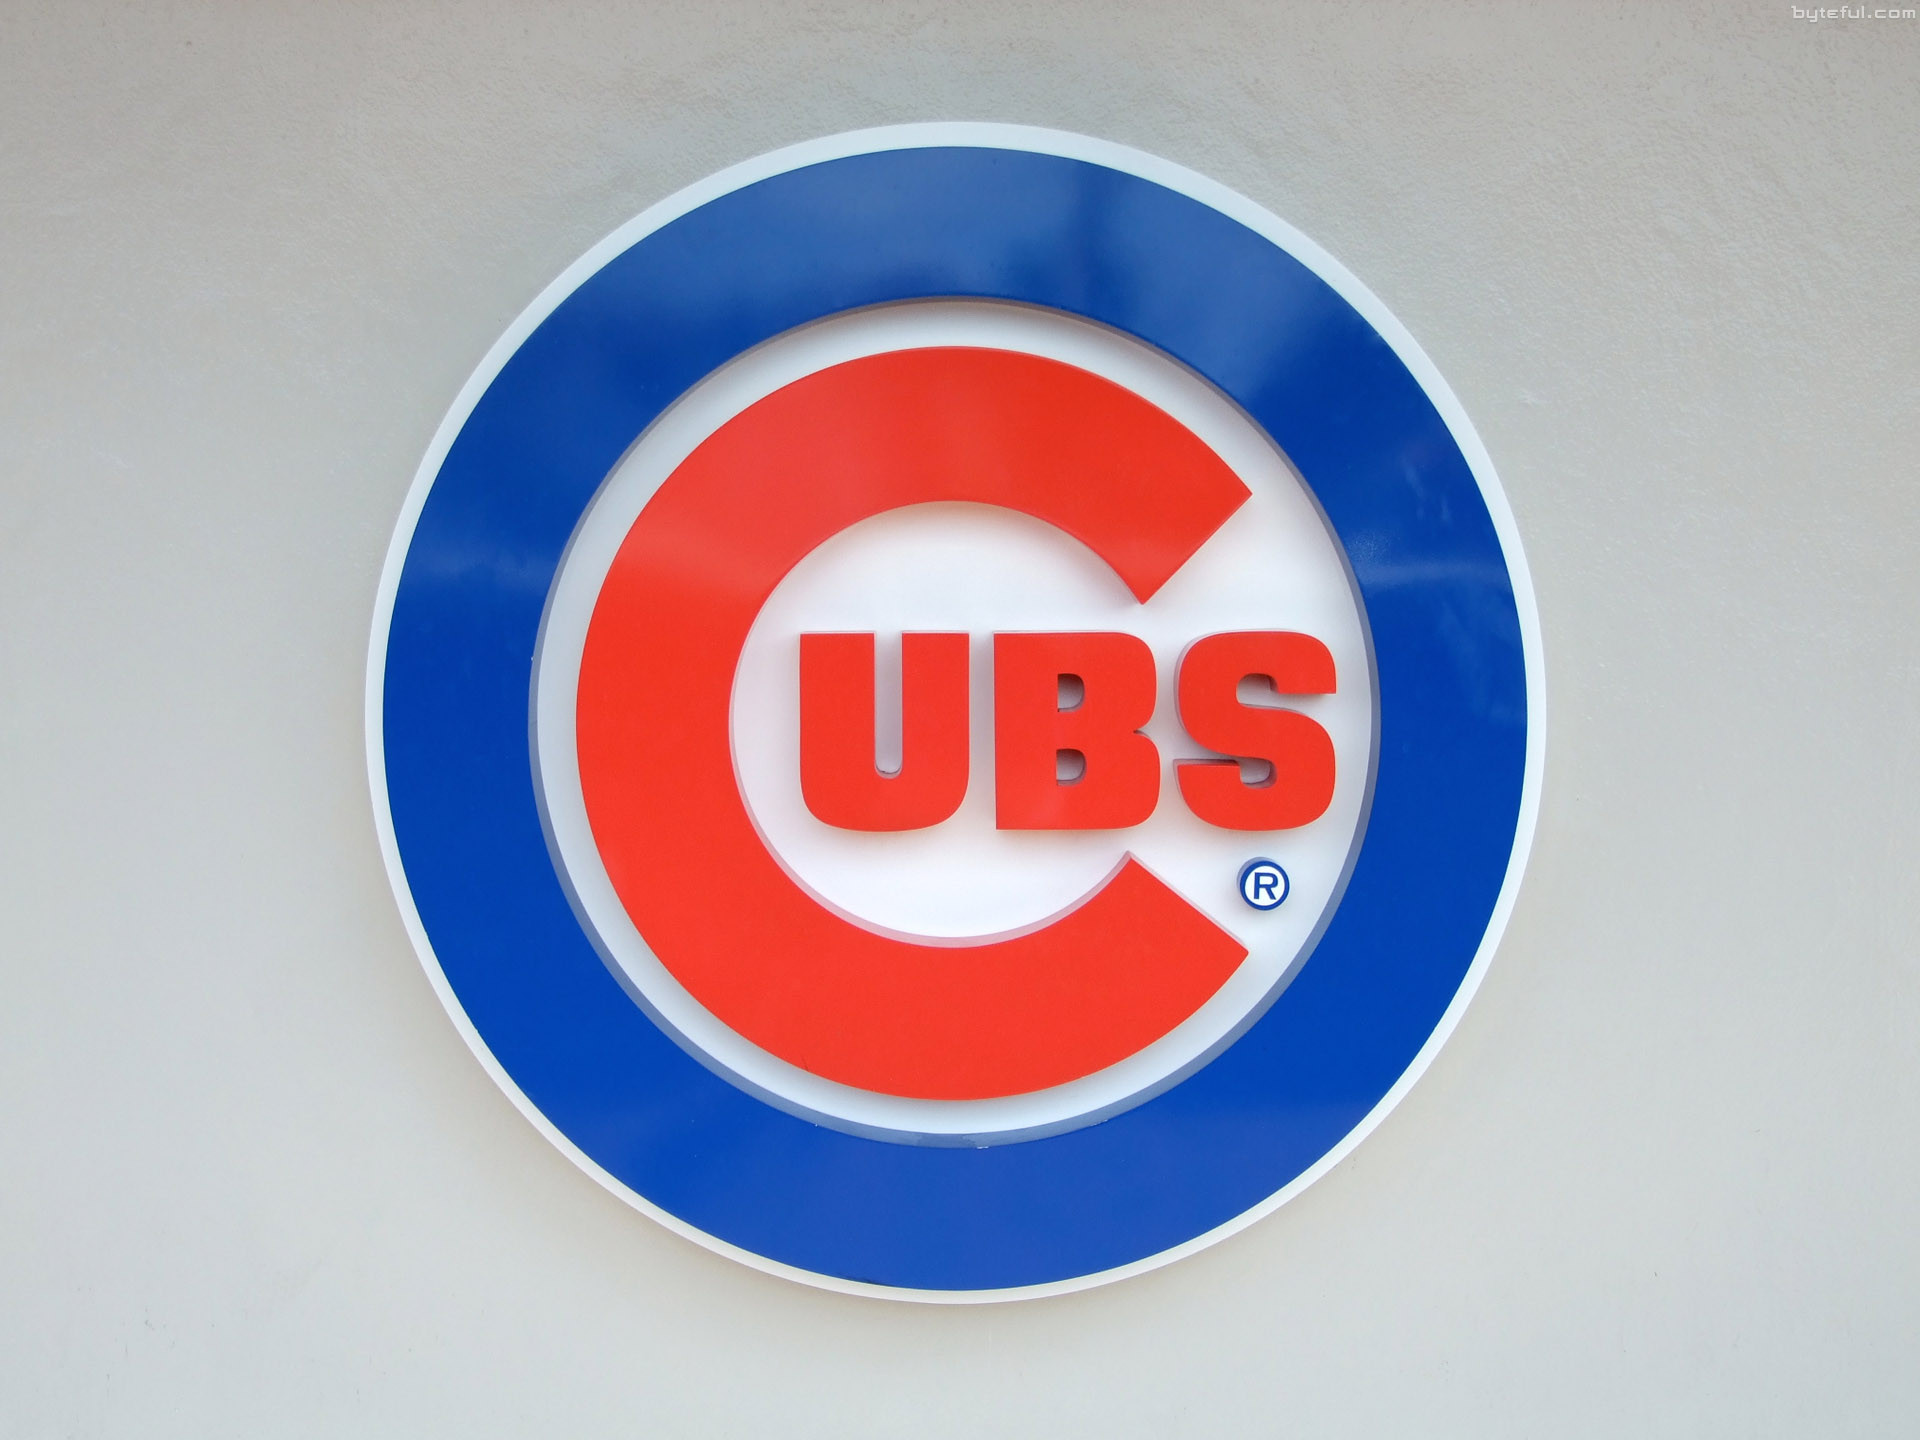 Chicago Cubs Mlb Baseball Wallpaper